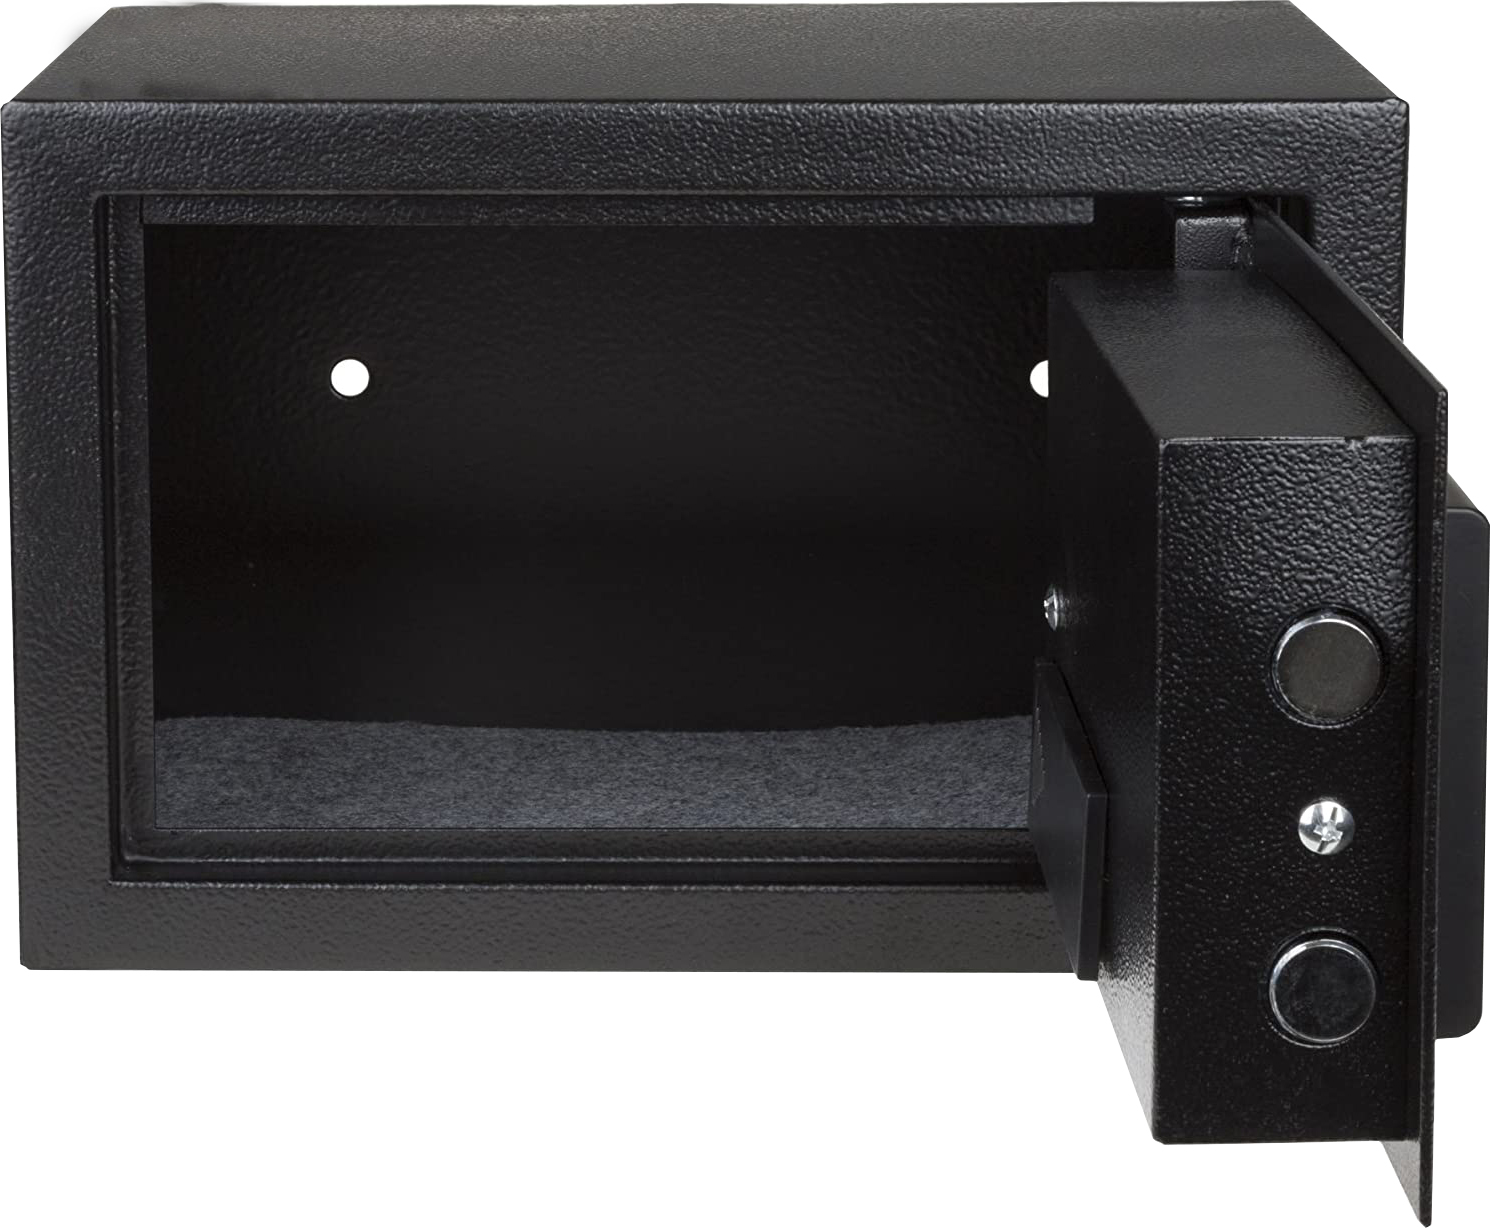 Mingyou 20SEC Electronic Home Steel Digital Safety Locker Safe Box Gun Safes Tresore Coffre Fort